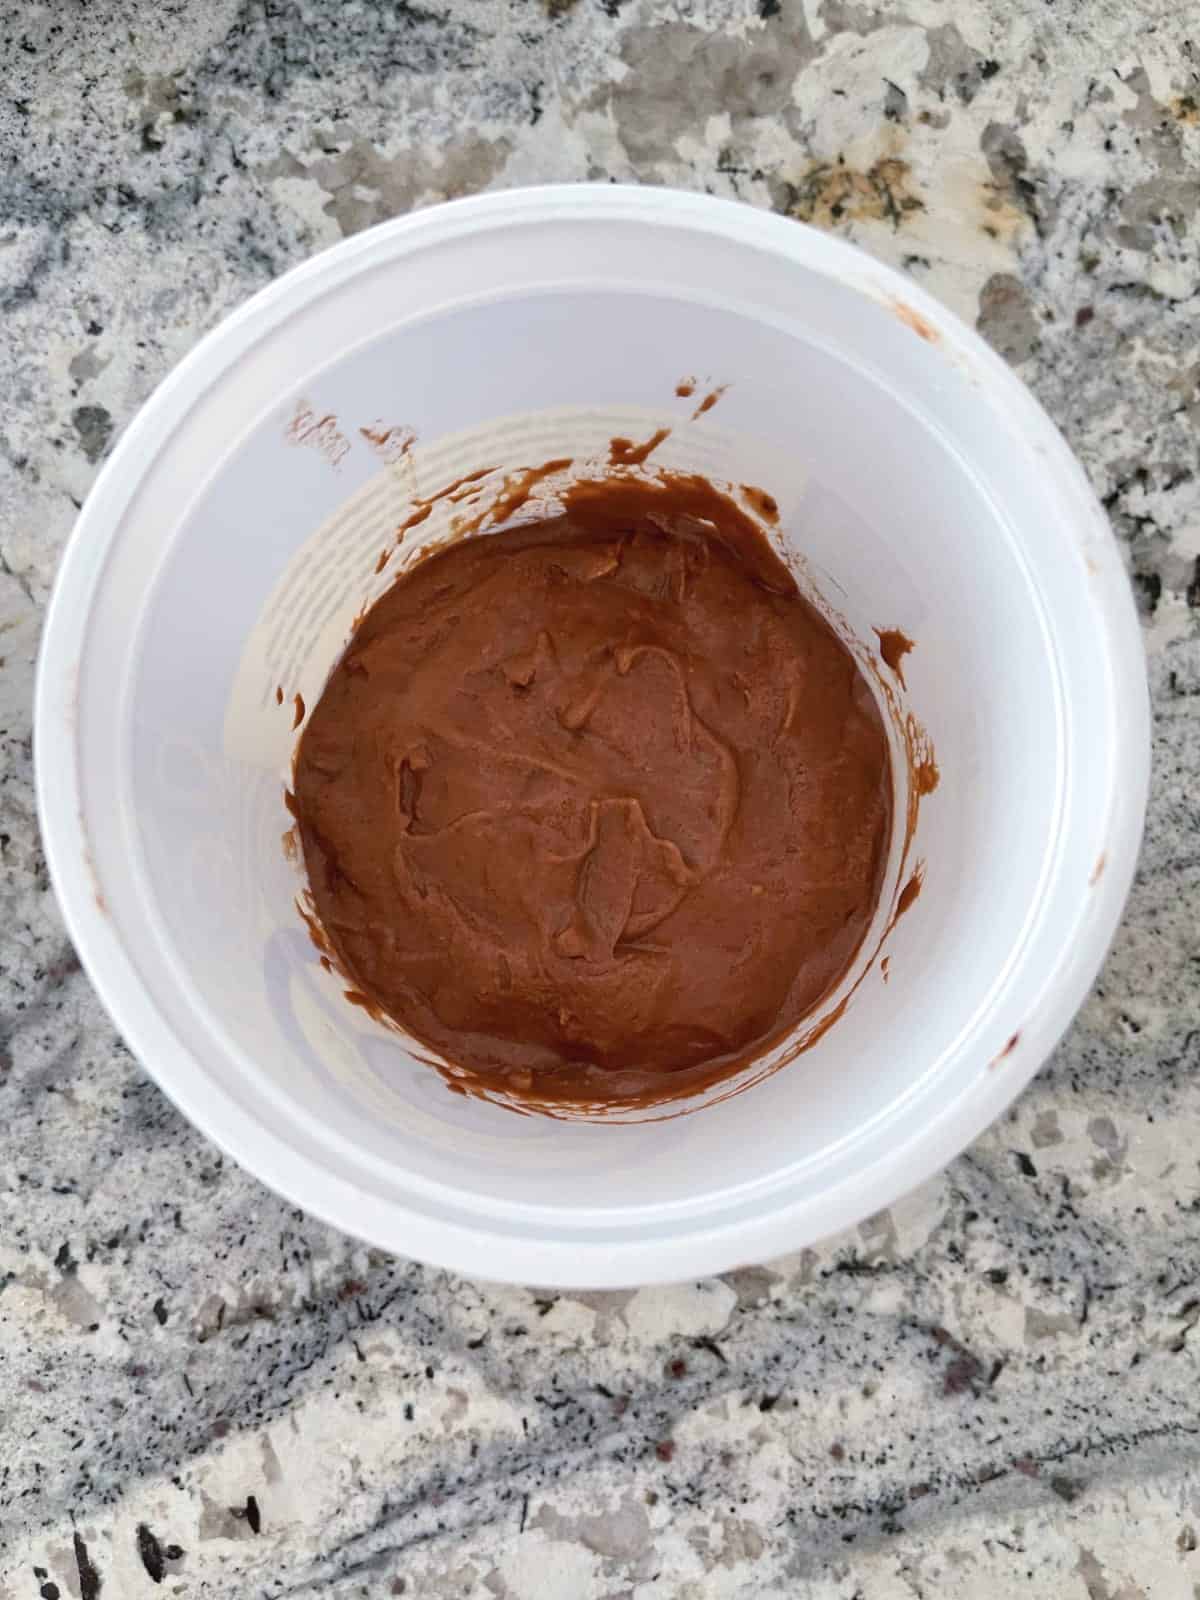 Unfrozen peanut butter chocolate nice cream in white container.